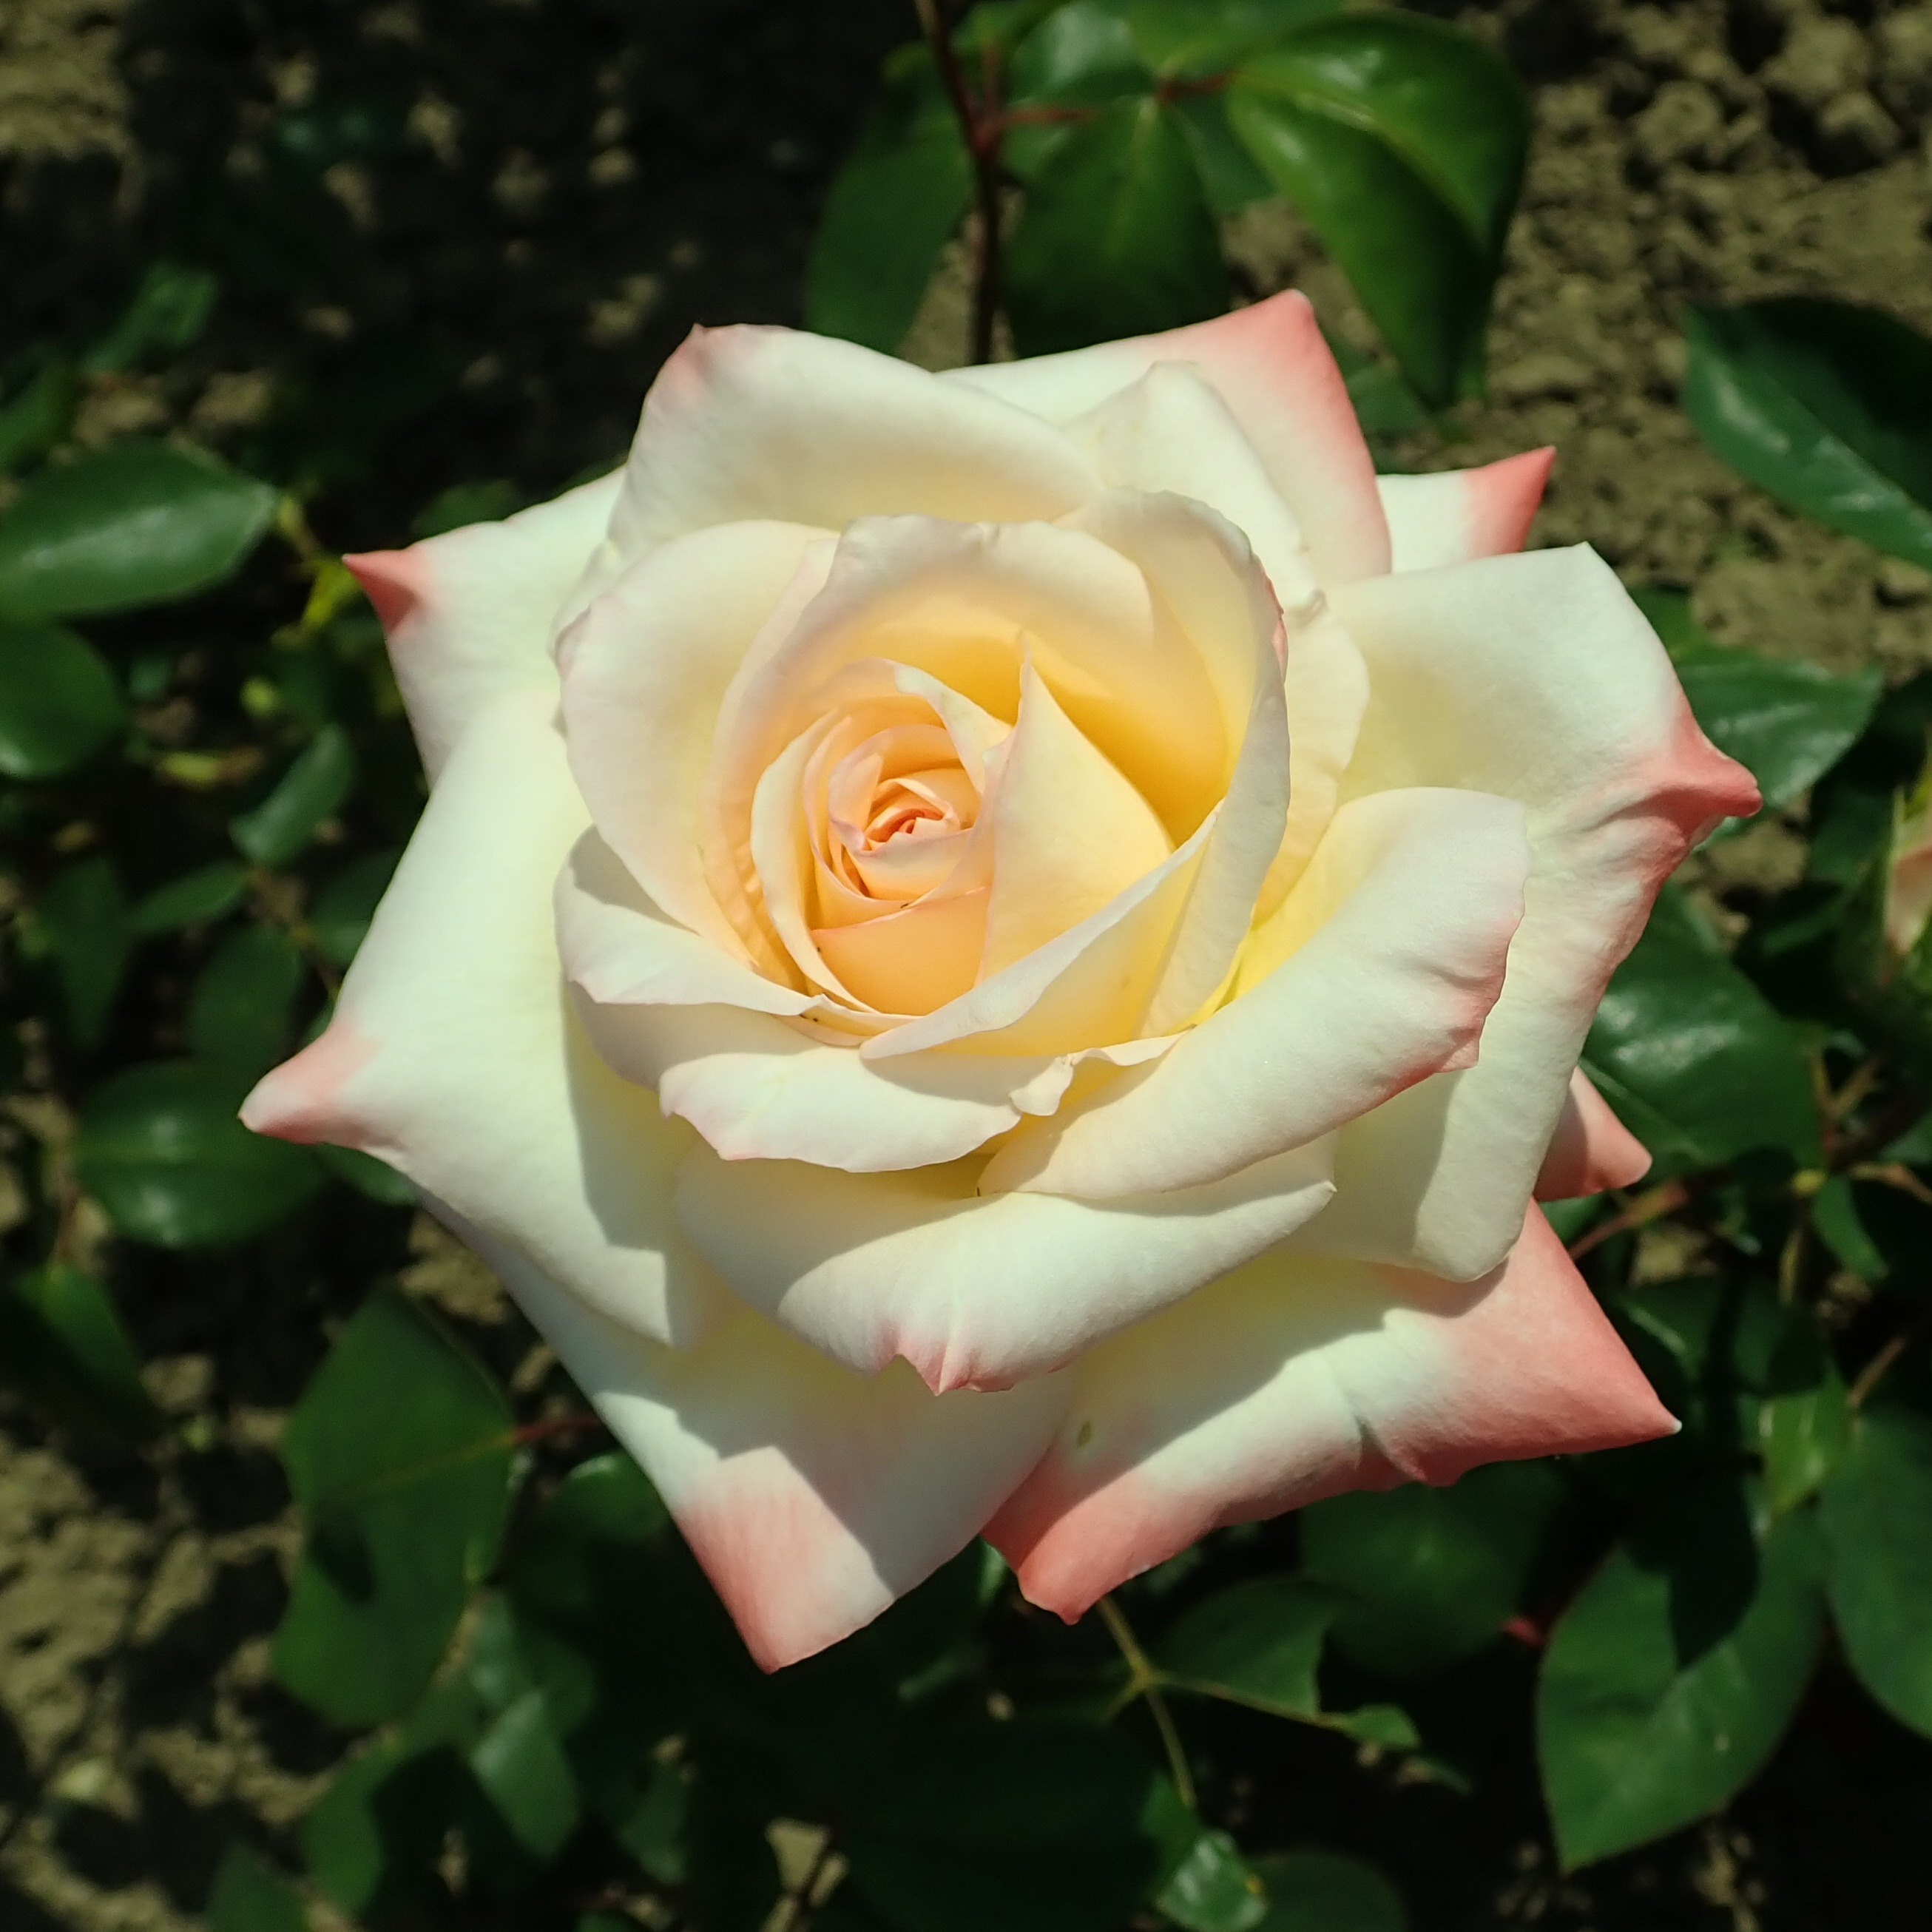 Hybrid tea rose - Wikipedia